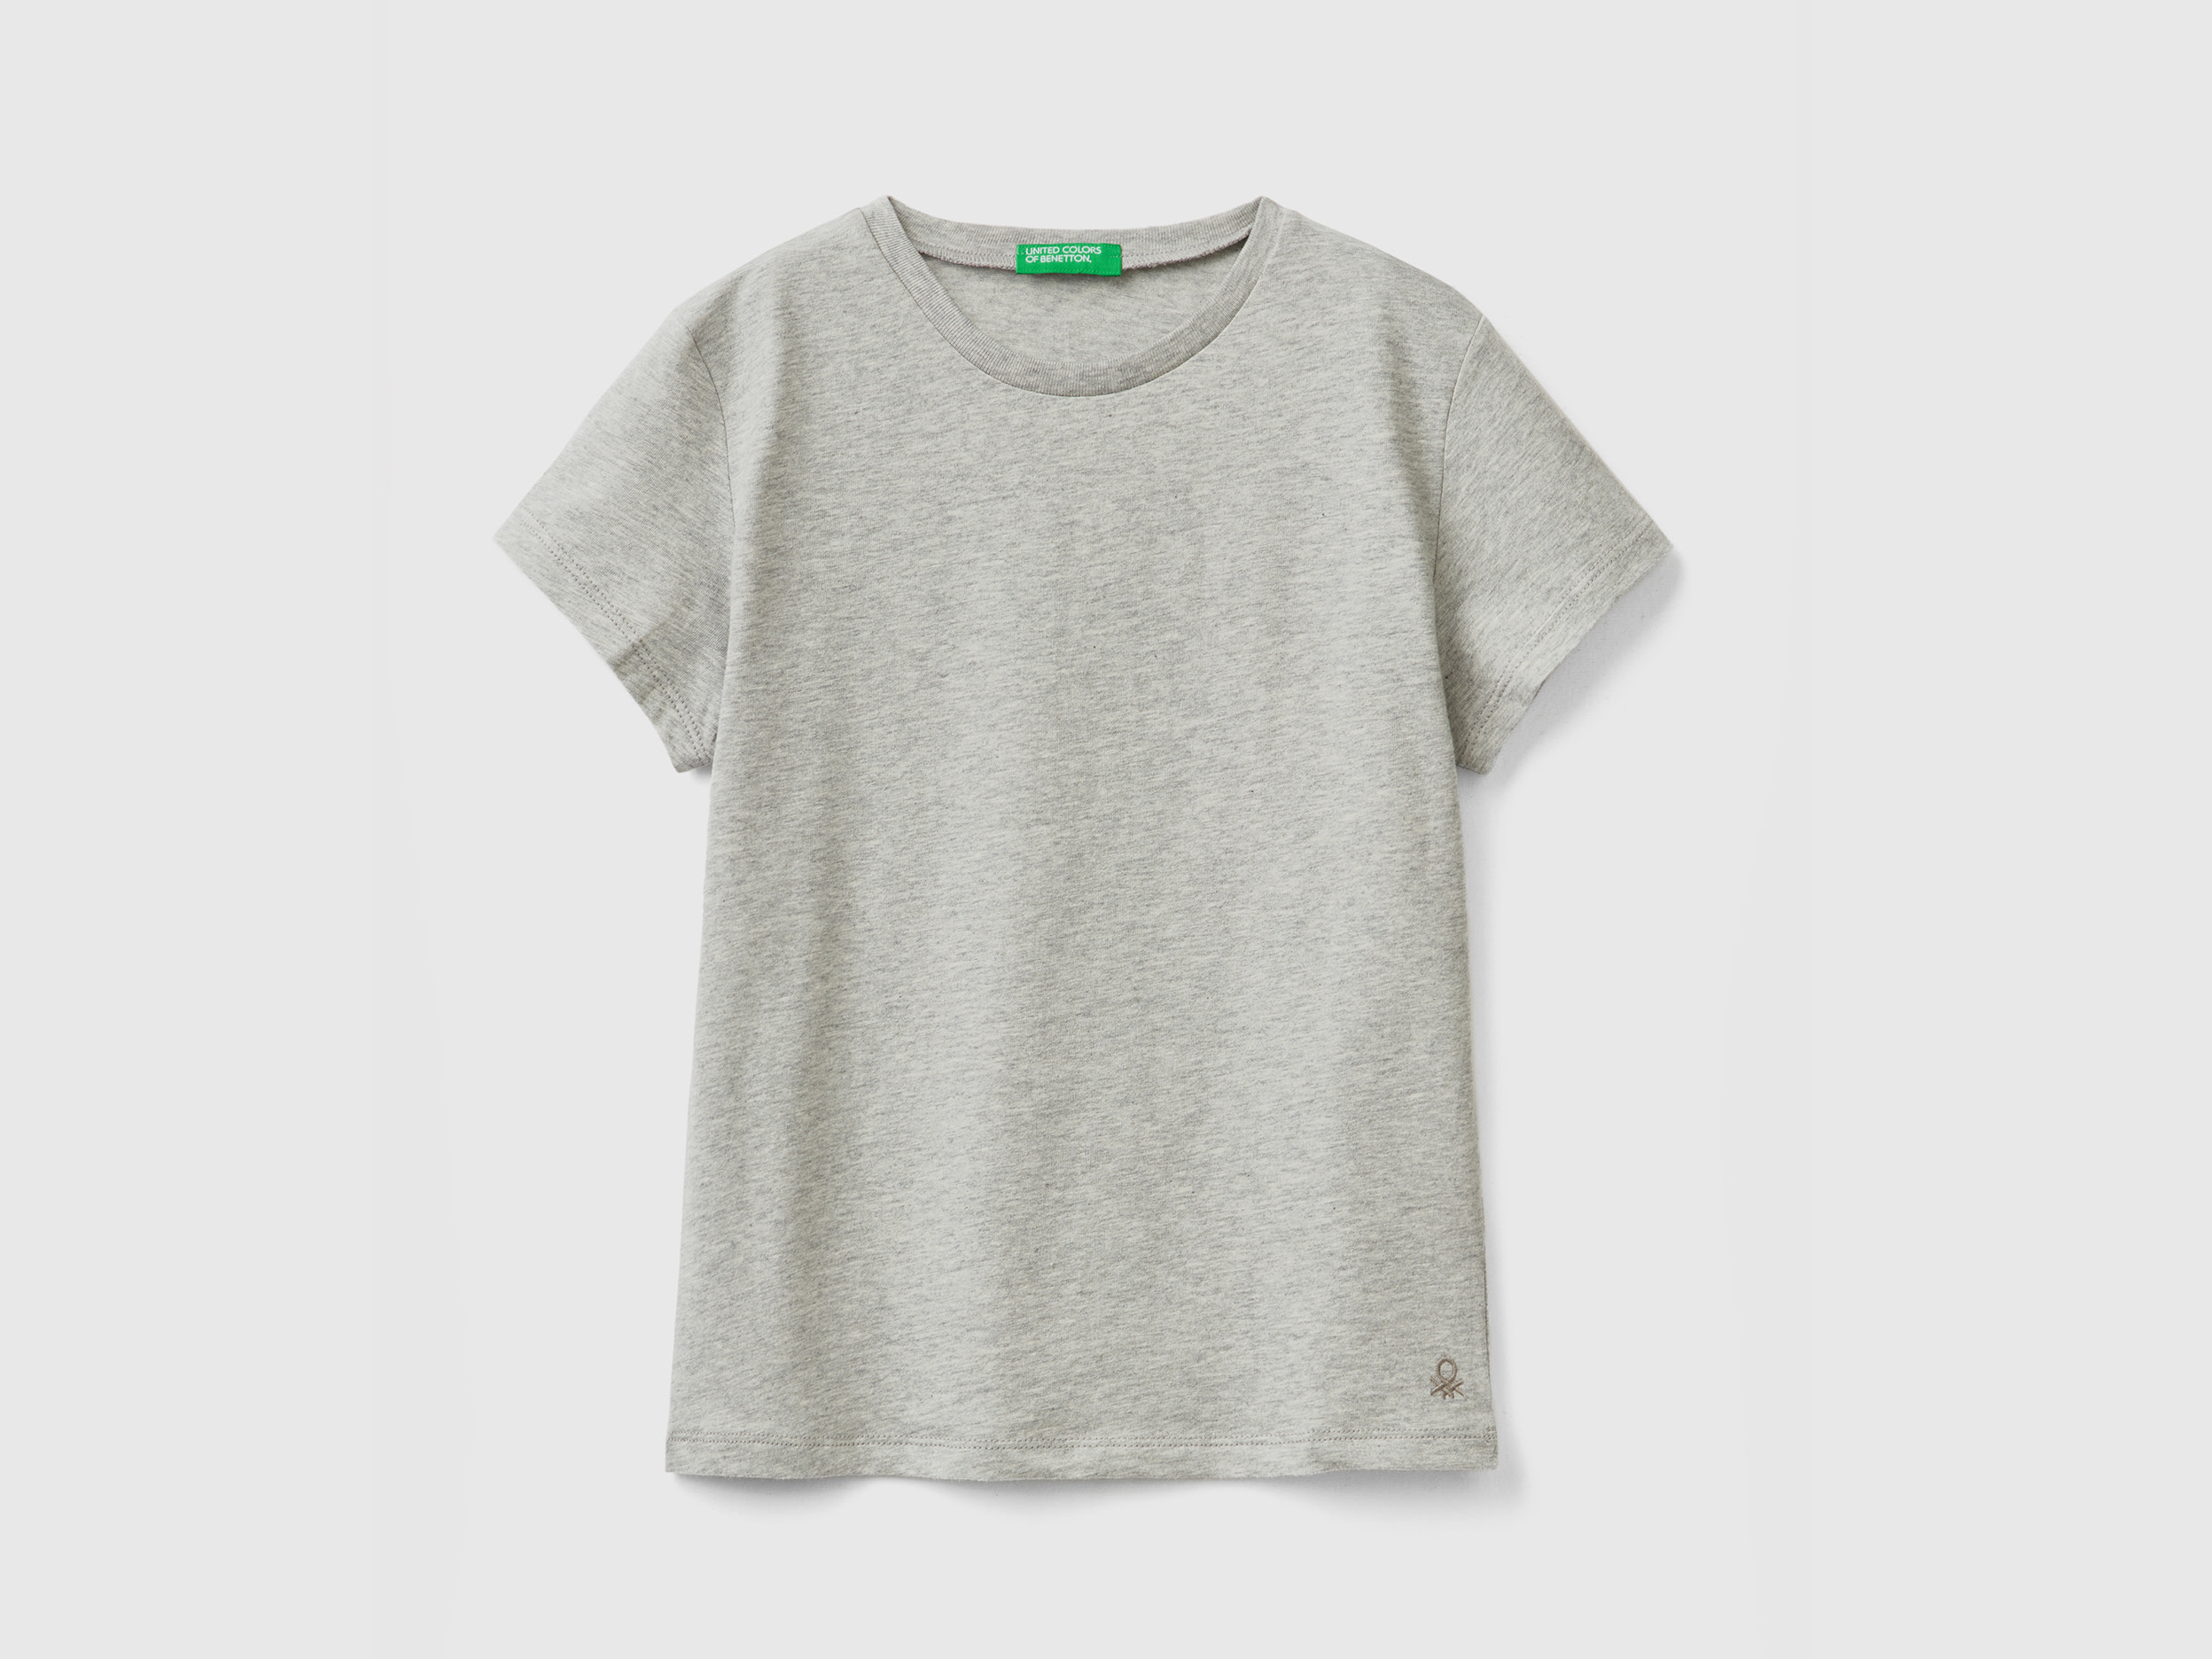 Benetton, T-shirt In Pure Organic Cotton, size L, Light Gray, Kids